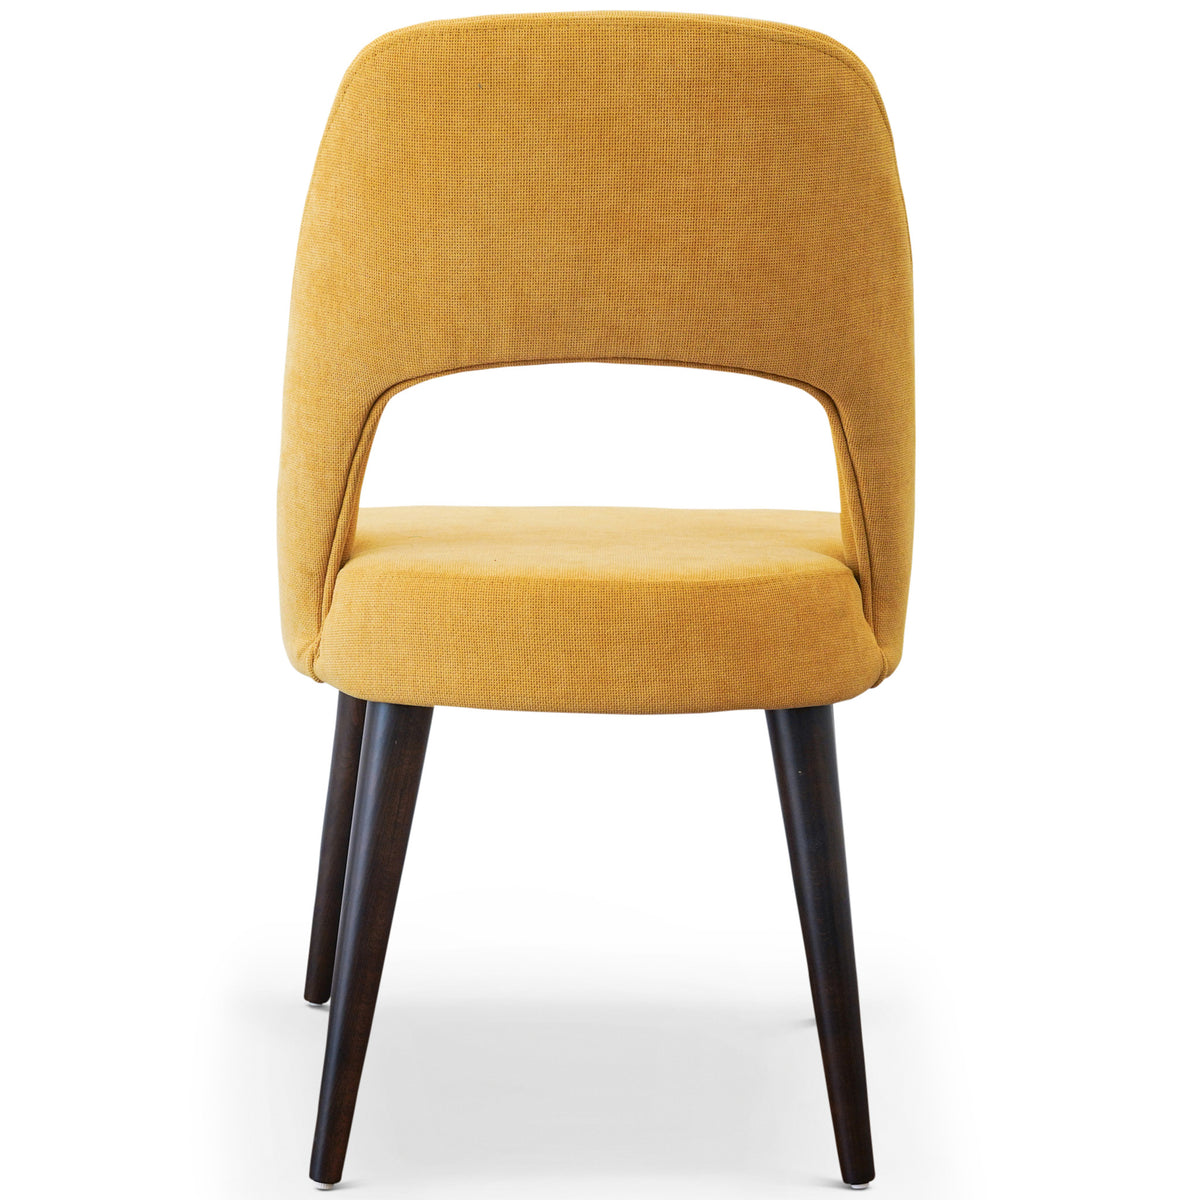 Ariana Mid Century Modern Yellow Dining Chair